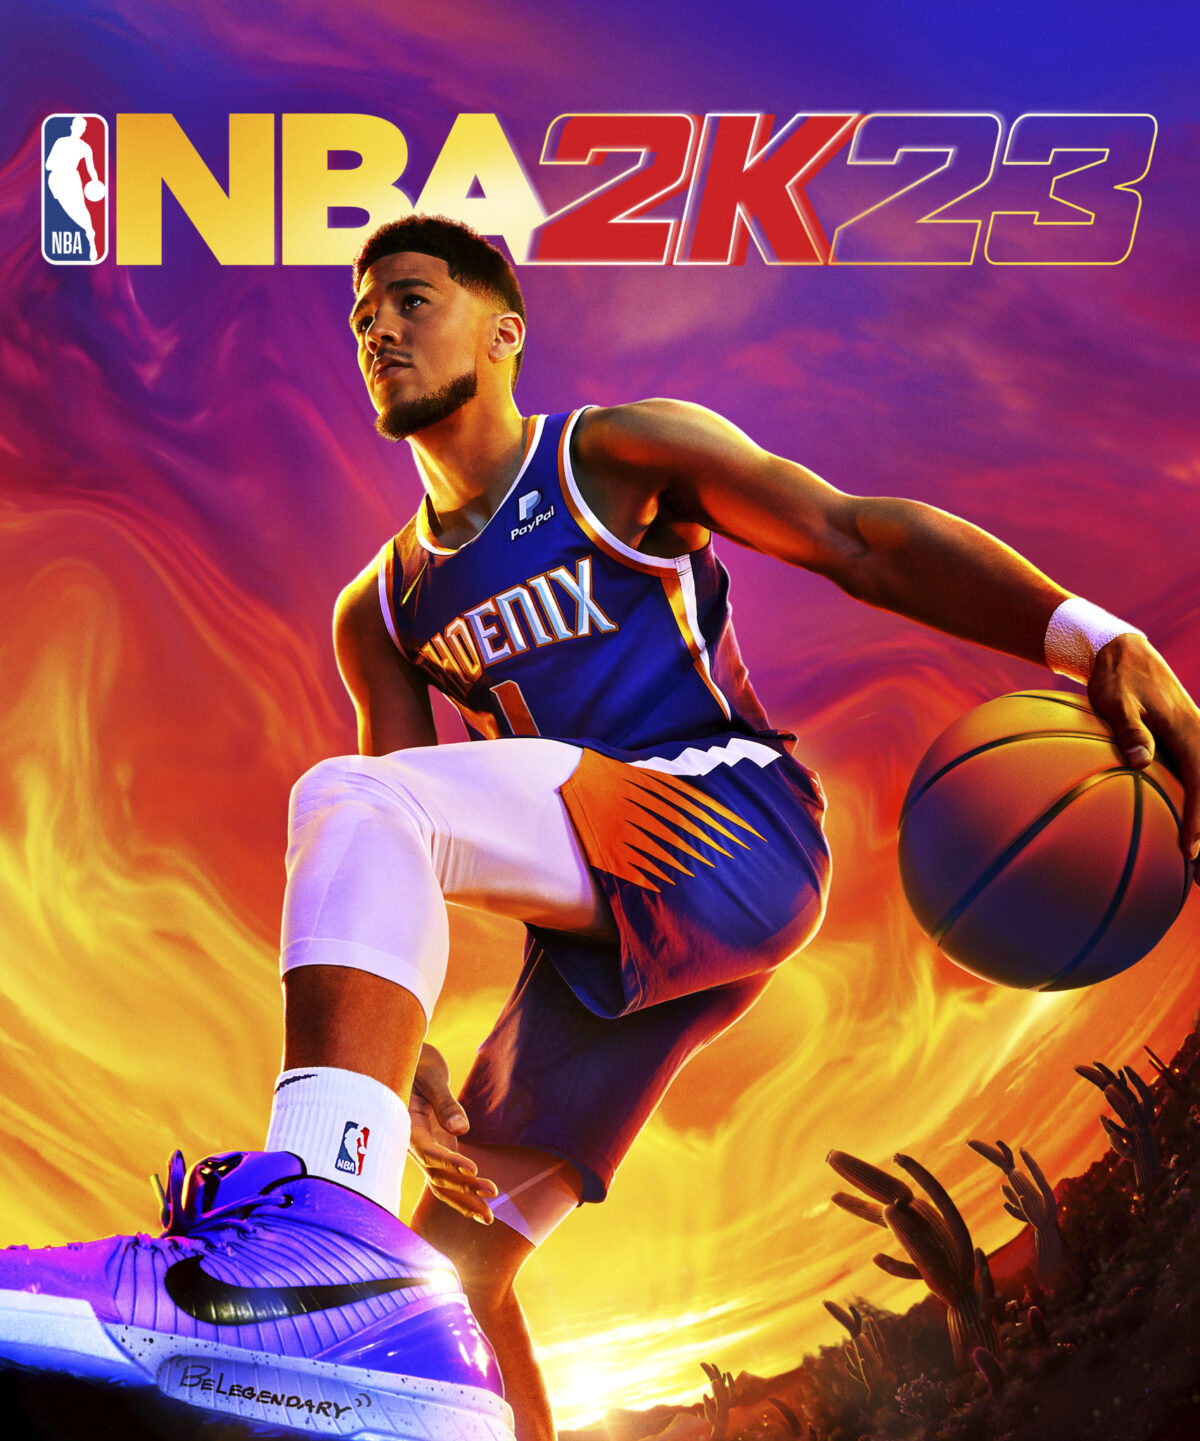 Phoenix’s Devin Booker named NBA 2K23 cover athlete